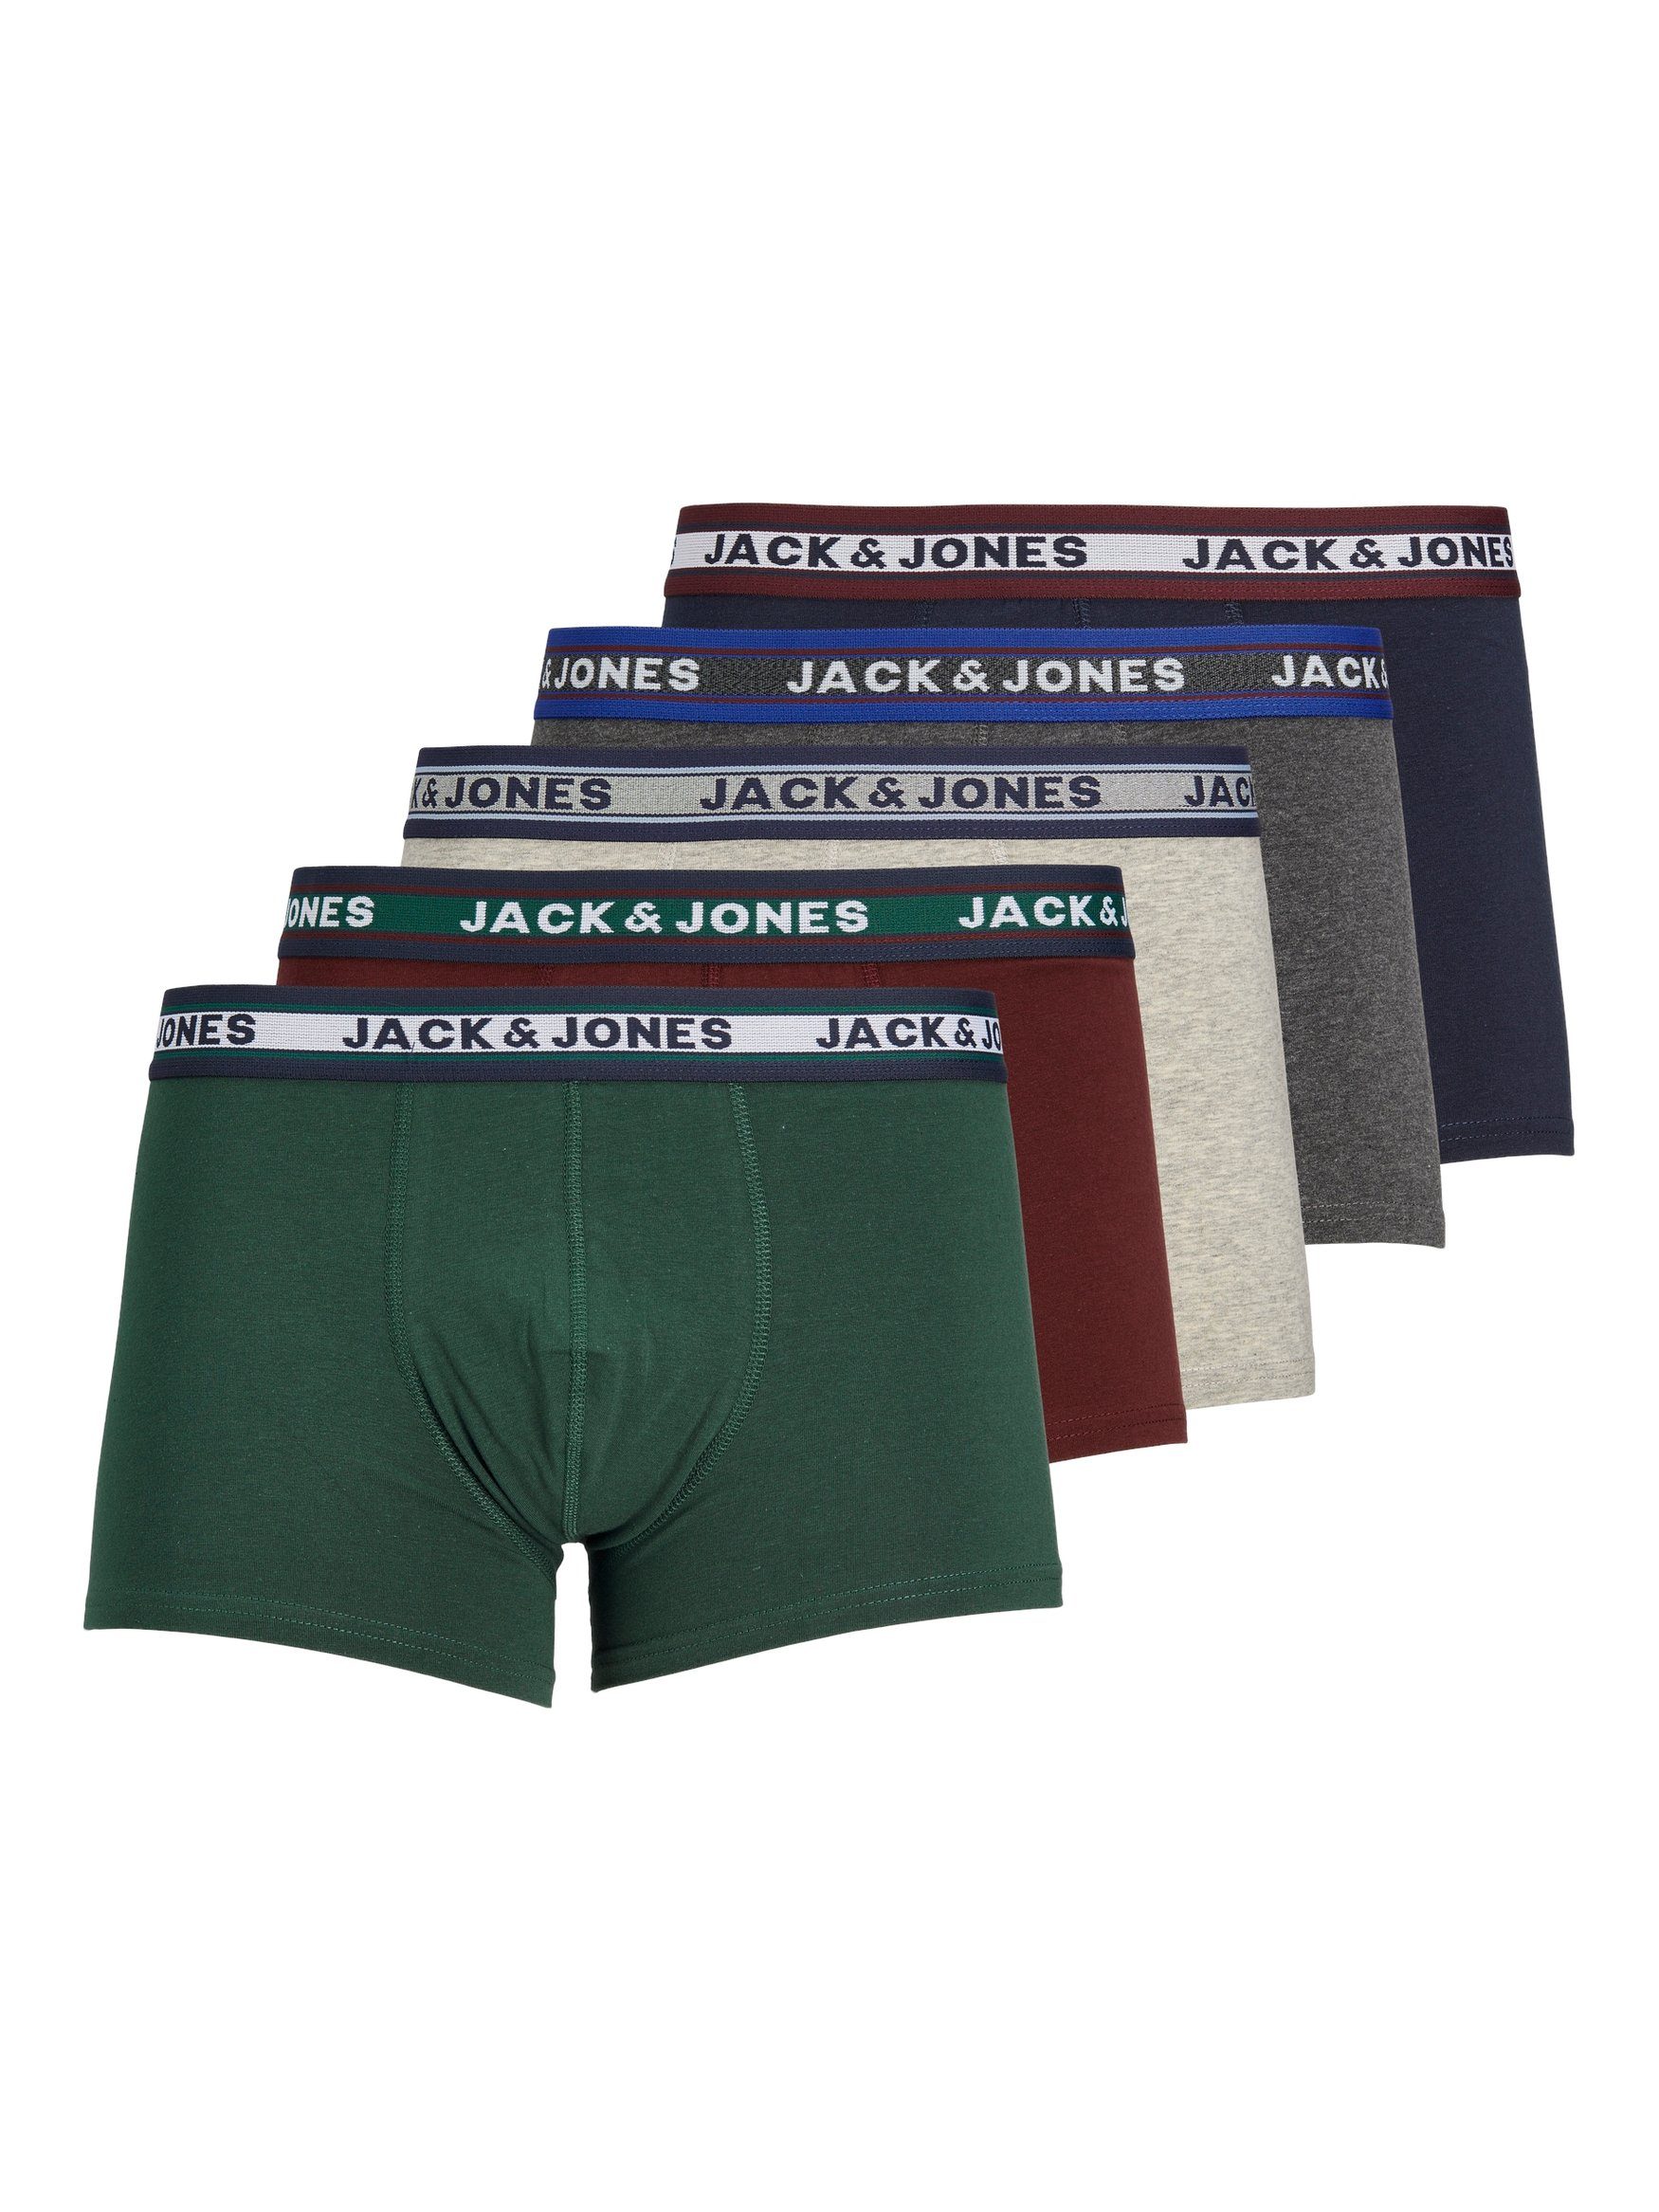 Jack & Jones Boxershorts (5-St) Unterhosen in royale/navy 6820 blazer/LGM 5er-Pack moss/port Set DGM/sea Boxershorts Mehrfarbig Trunks JACOLIVER Basic